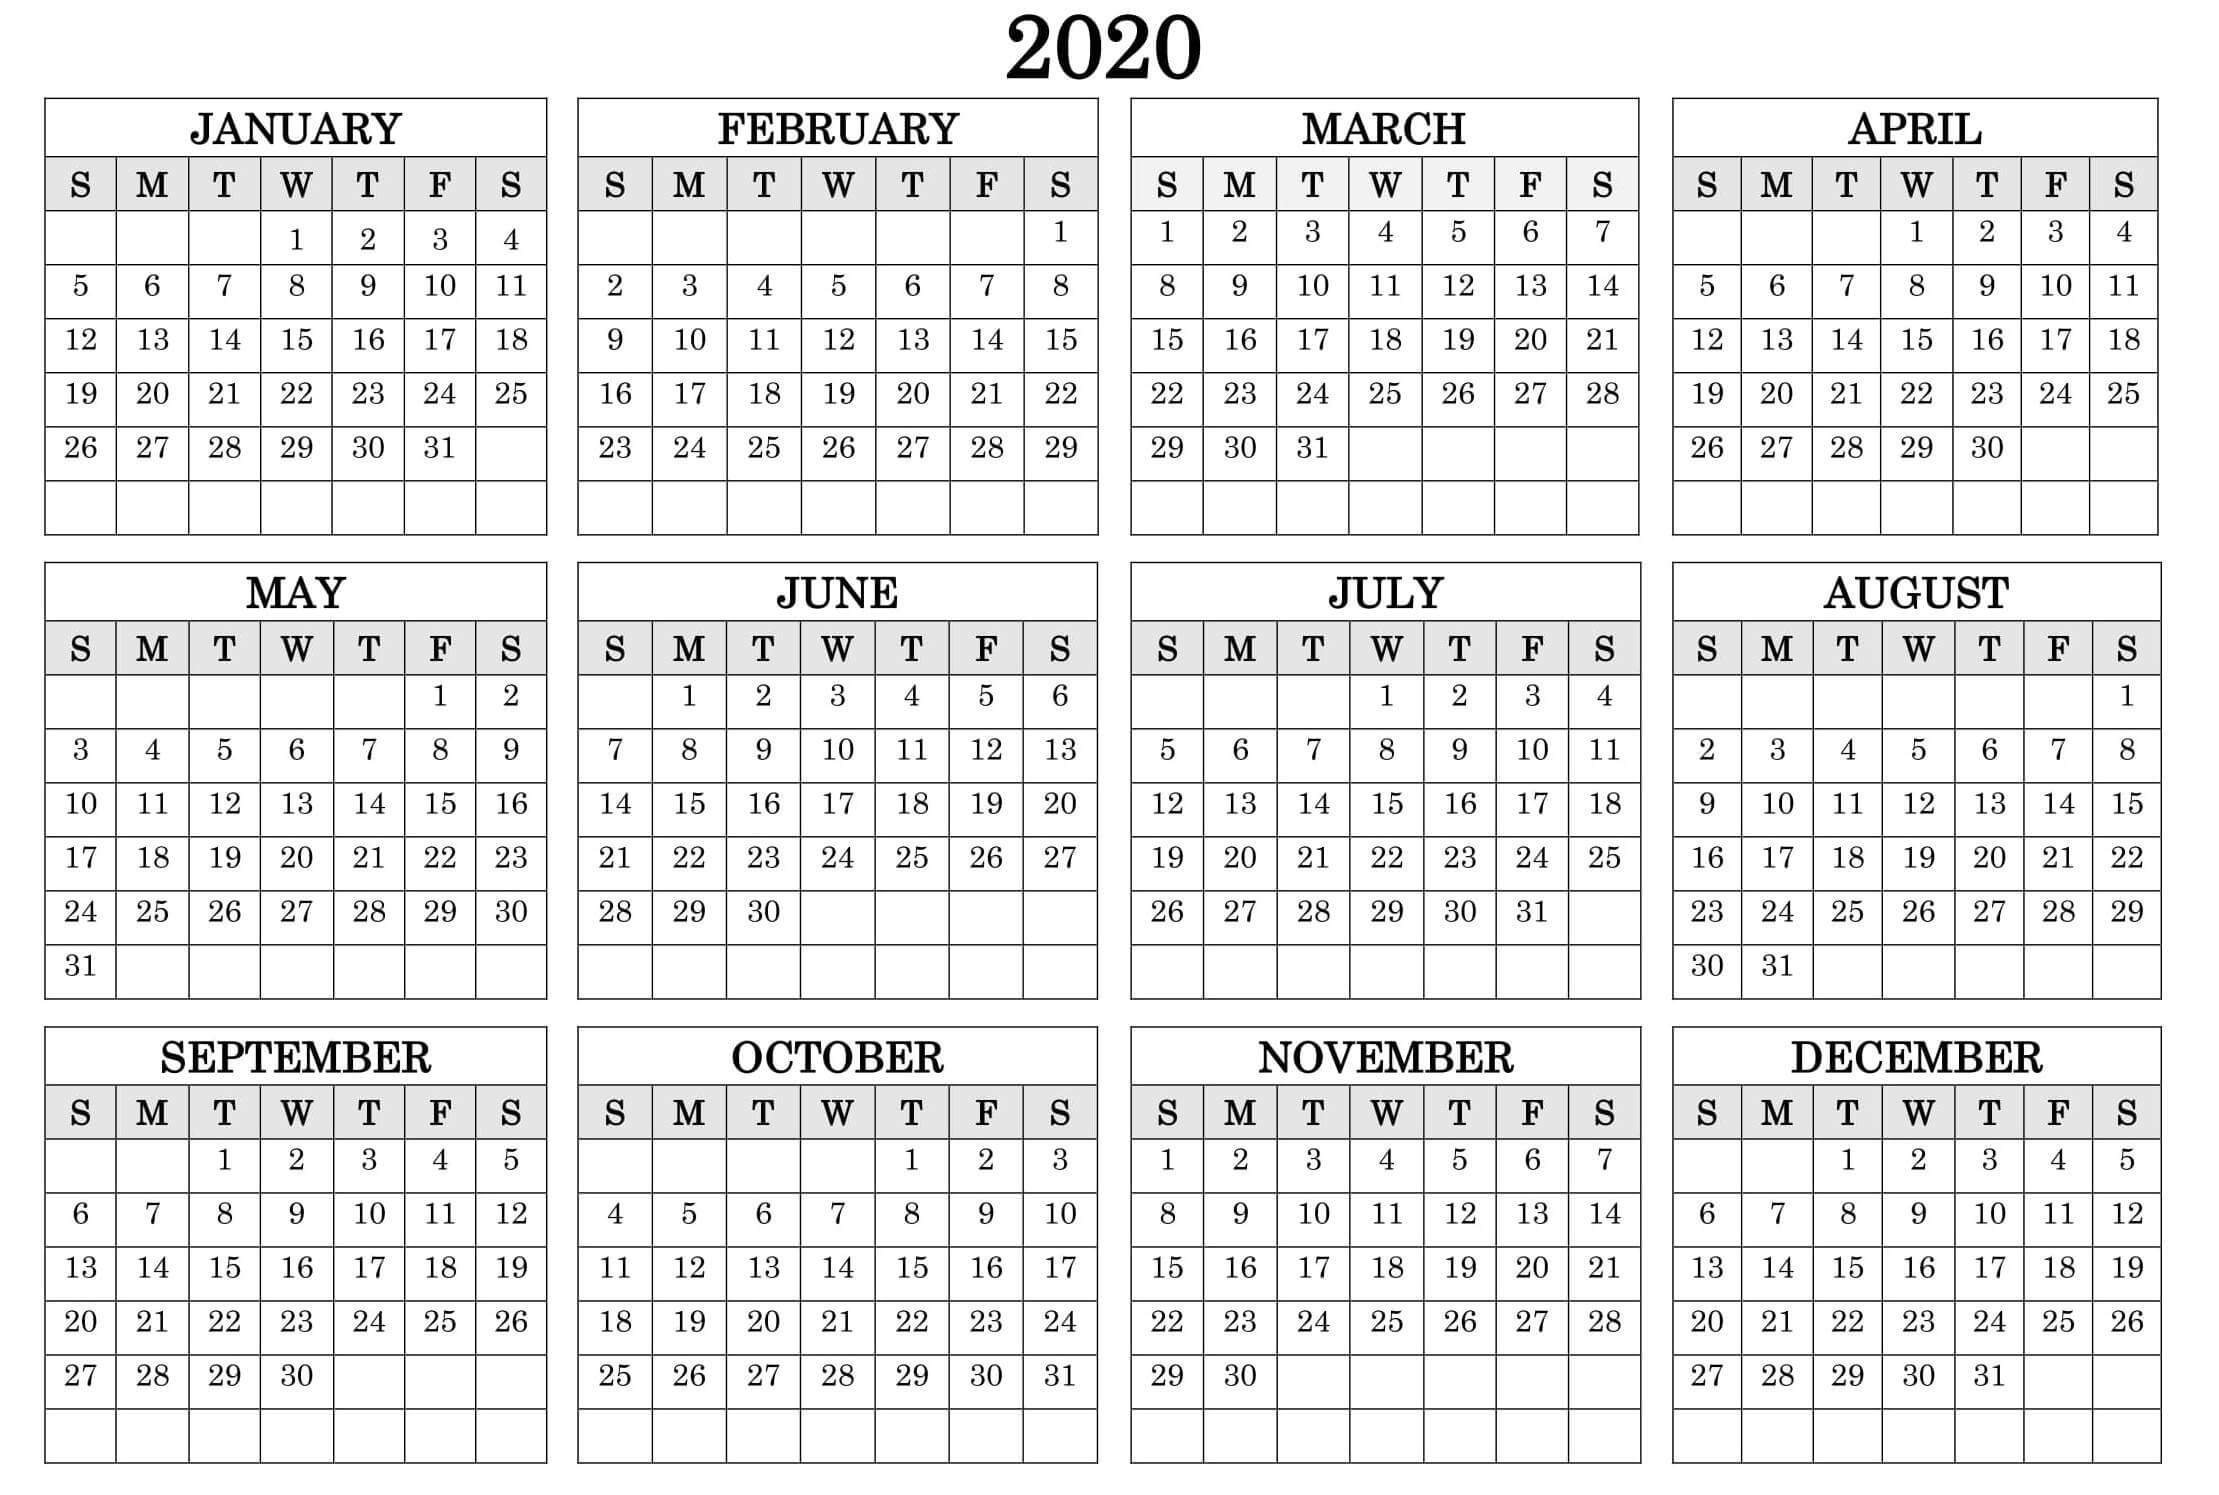 2020 Calendar Printable Pdf With Holidays  Google Search regarding Printable 12 Month 2020 Calendar